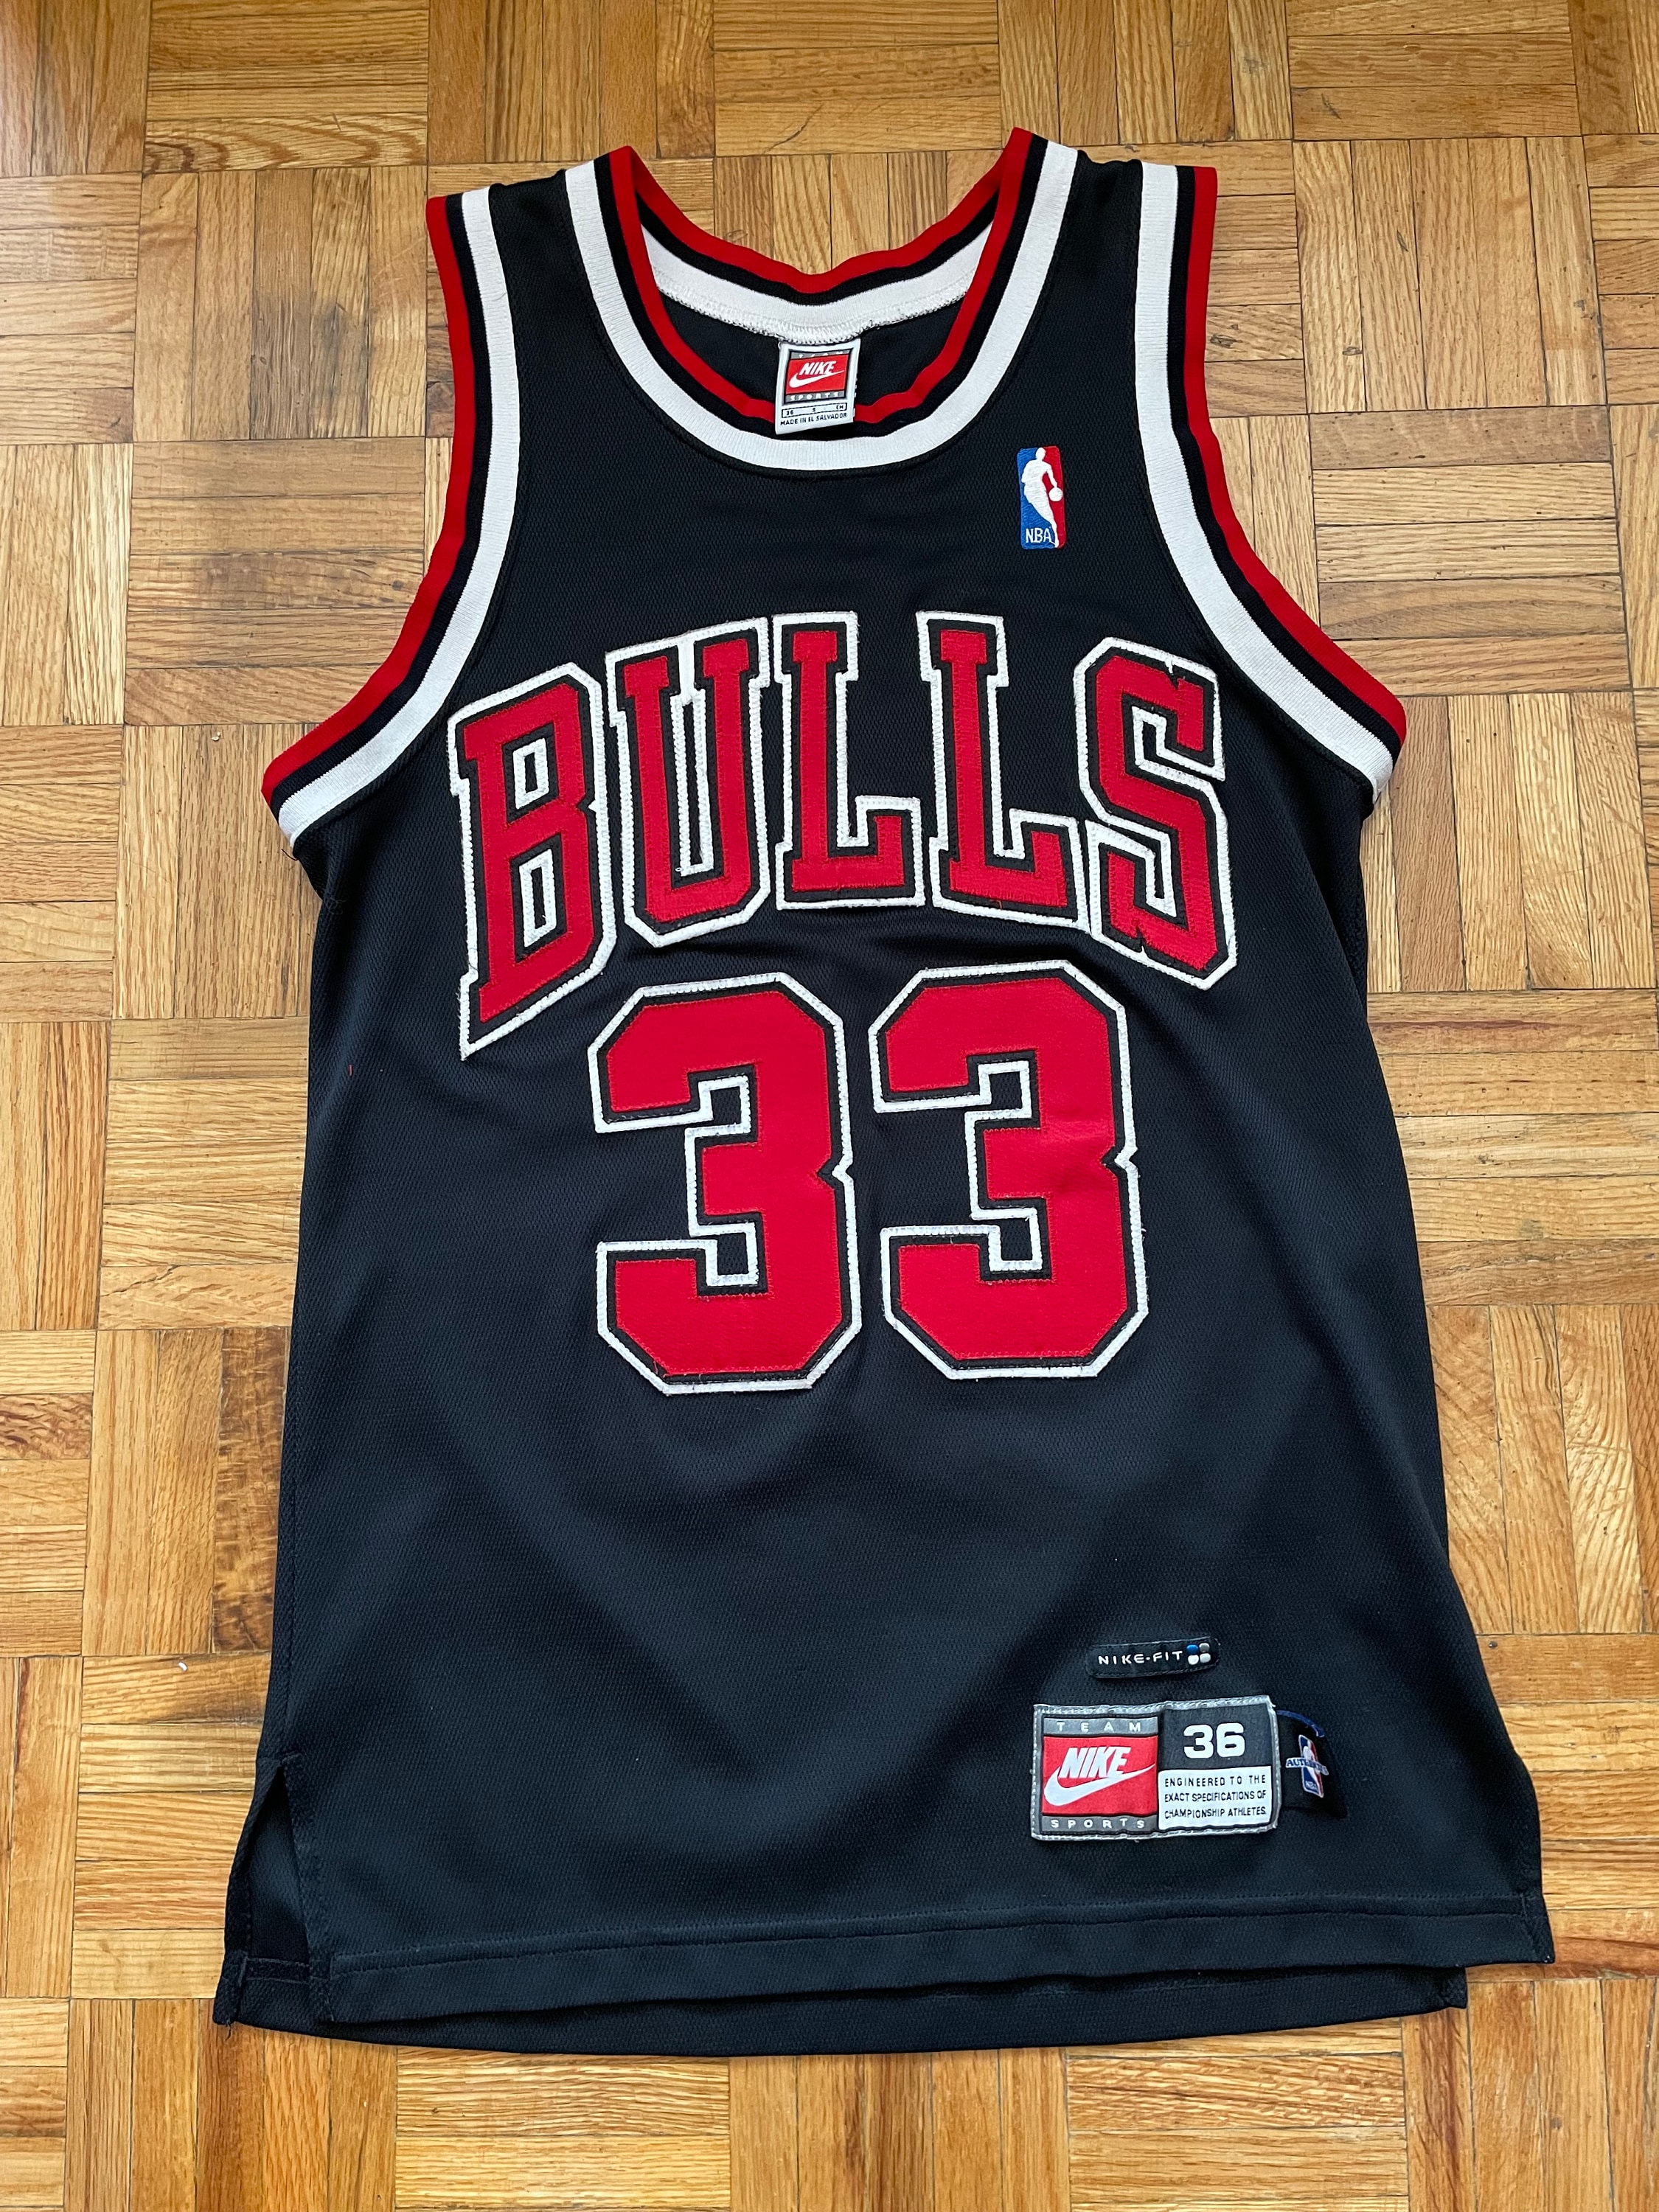 Scottie Pippen Chicago Bulls 33 Nike basketball jersey Sz 52, XL stitched